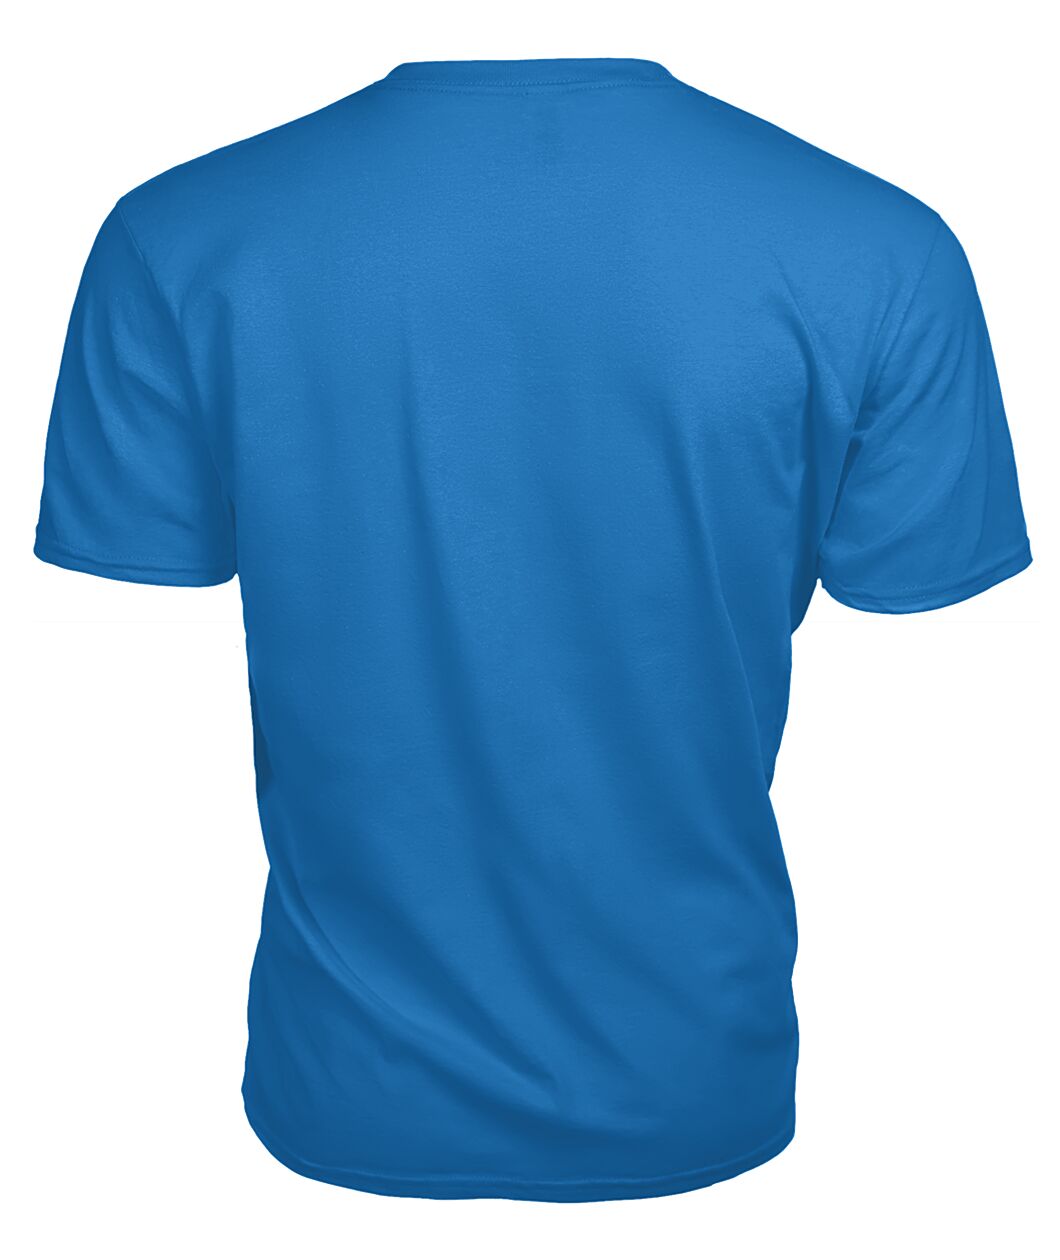 Swinton Family Tartan - 2D T-shirt